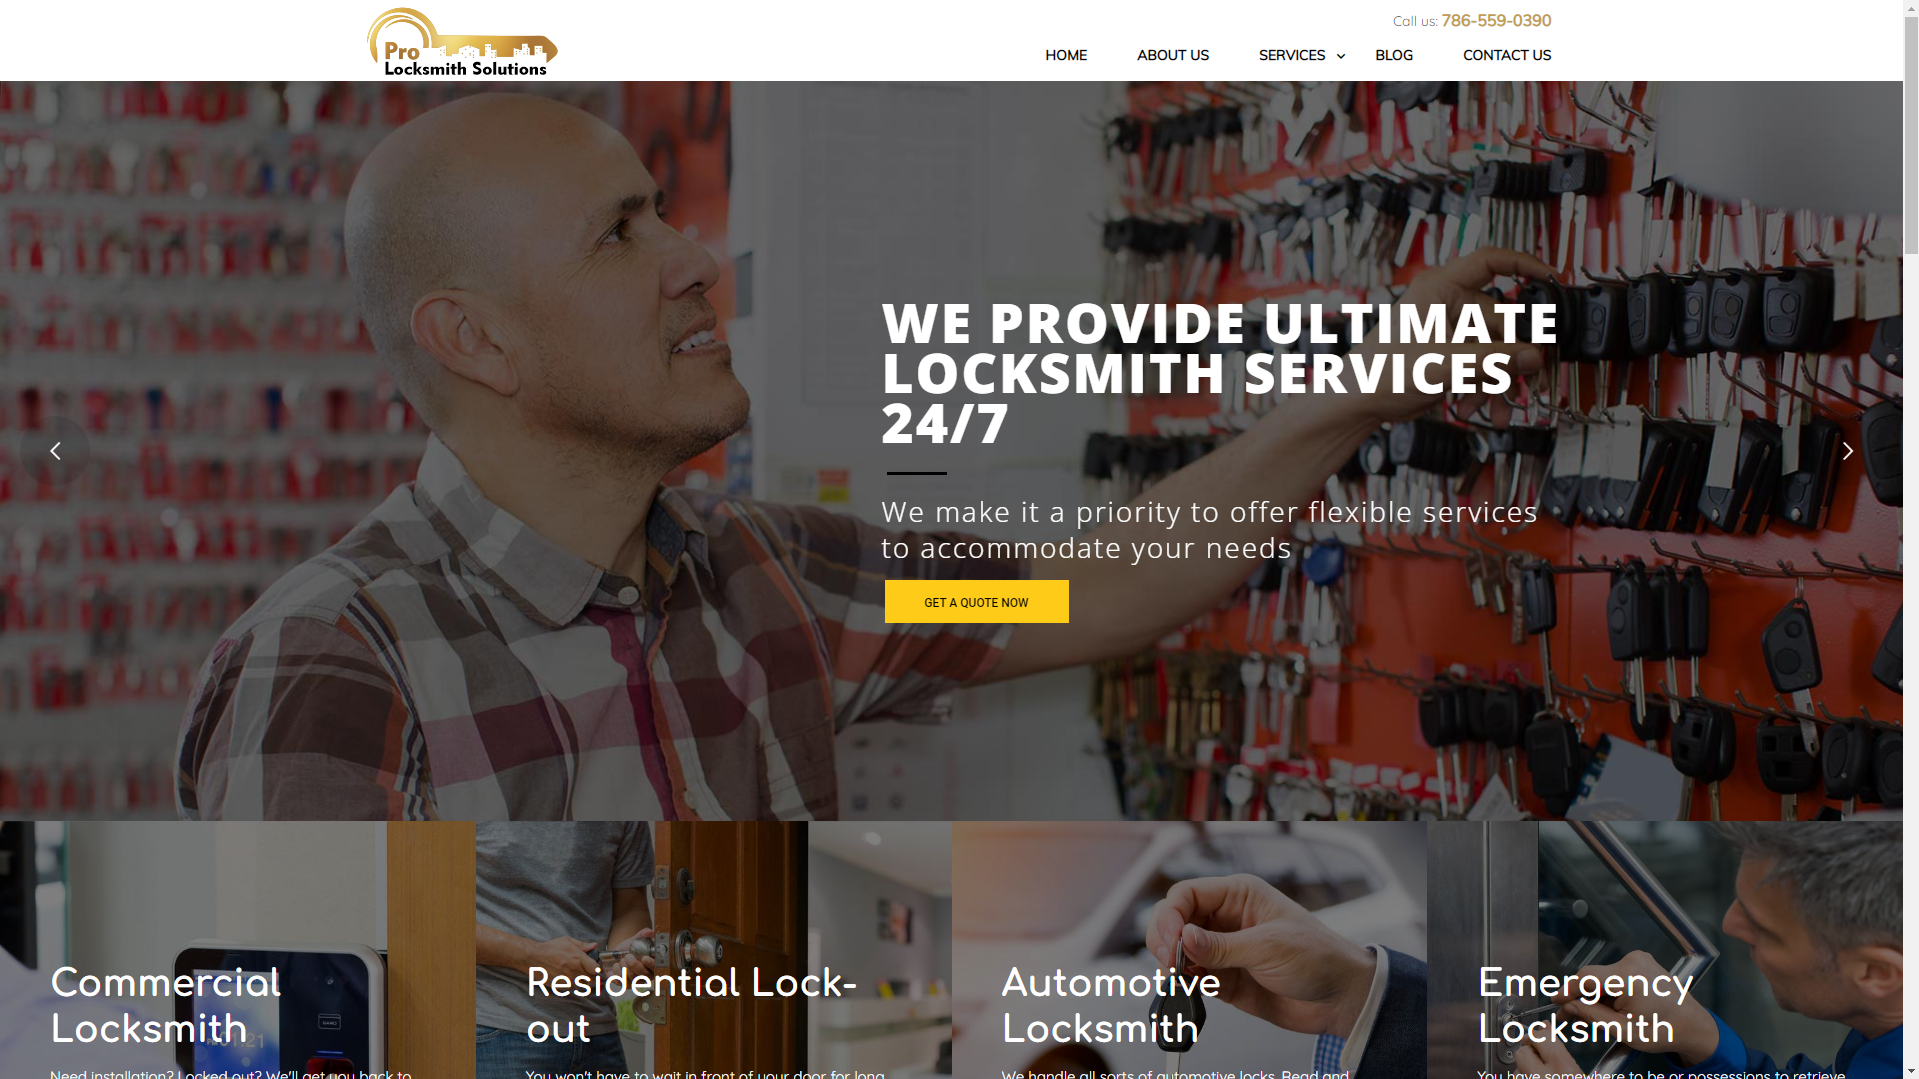 Pro locksmith solutions